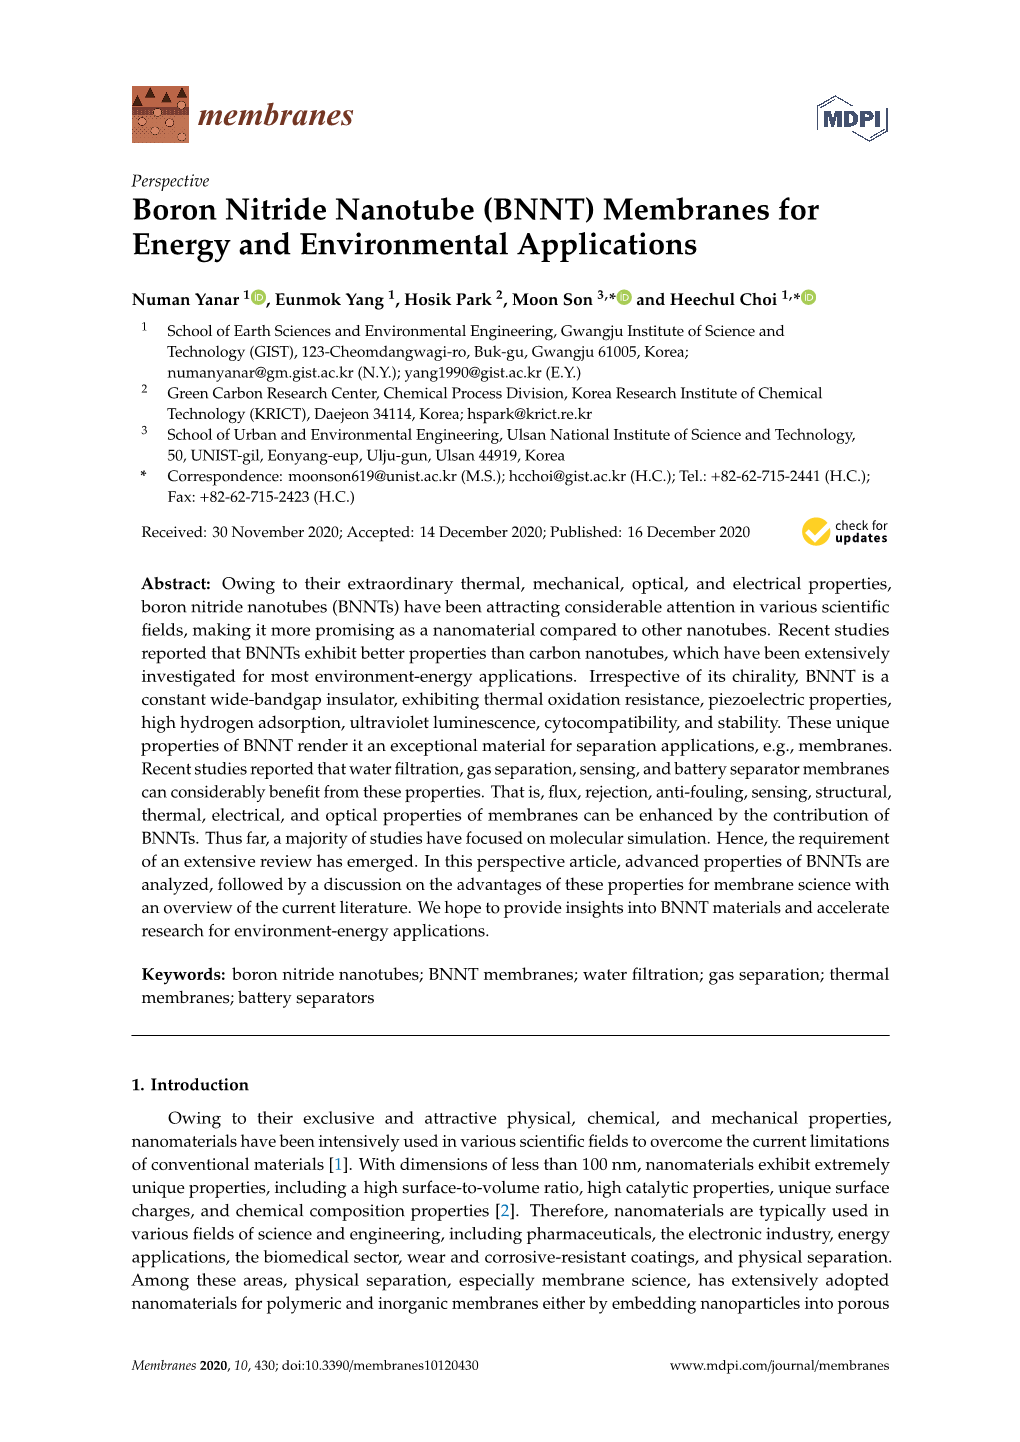 Boron Nitride Nanotube (BNNT) Membranes for Energy and Environmental Applications